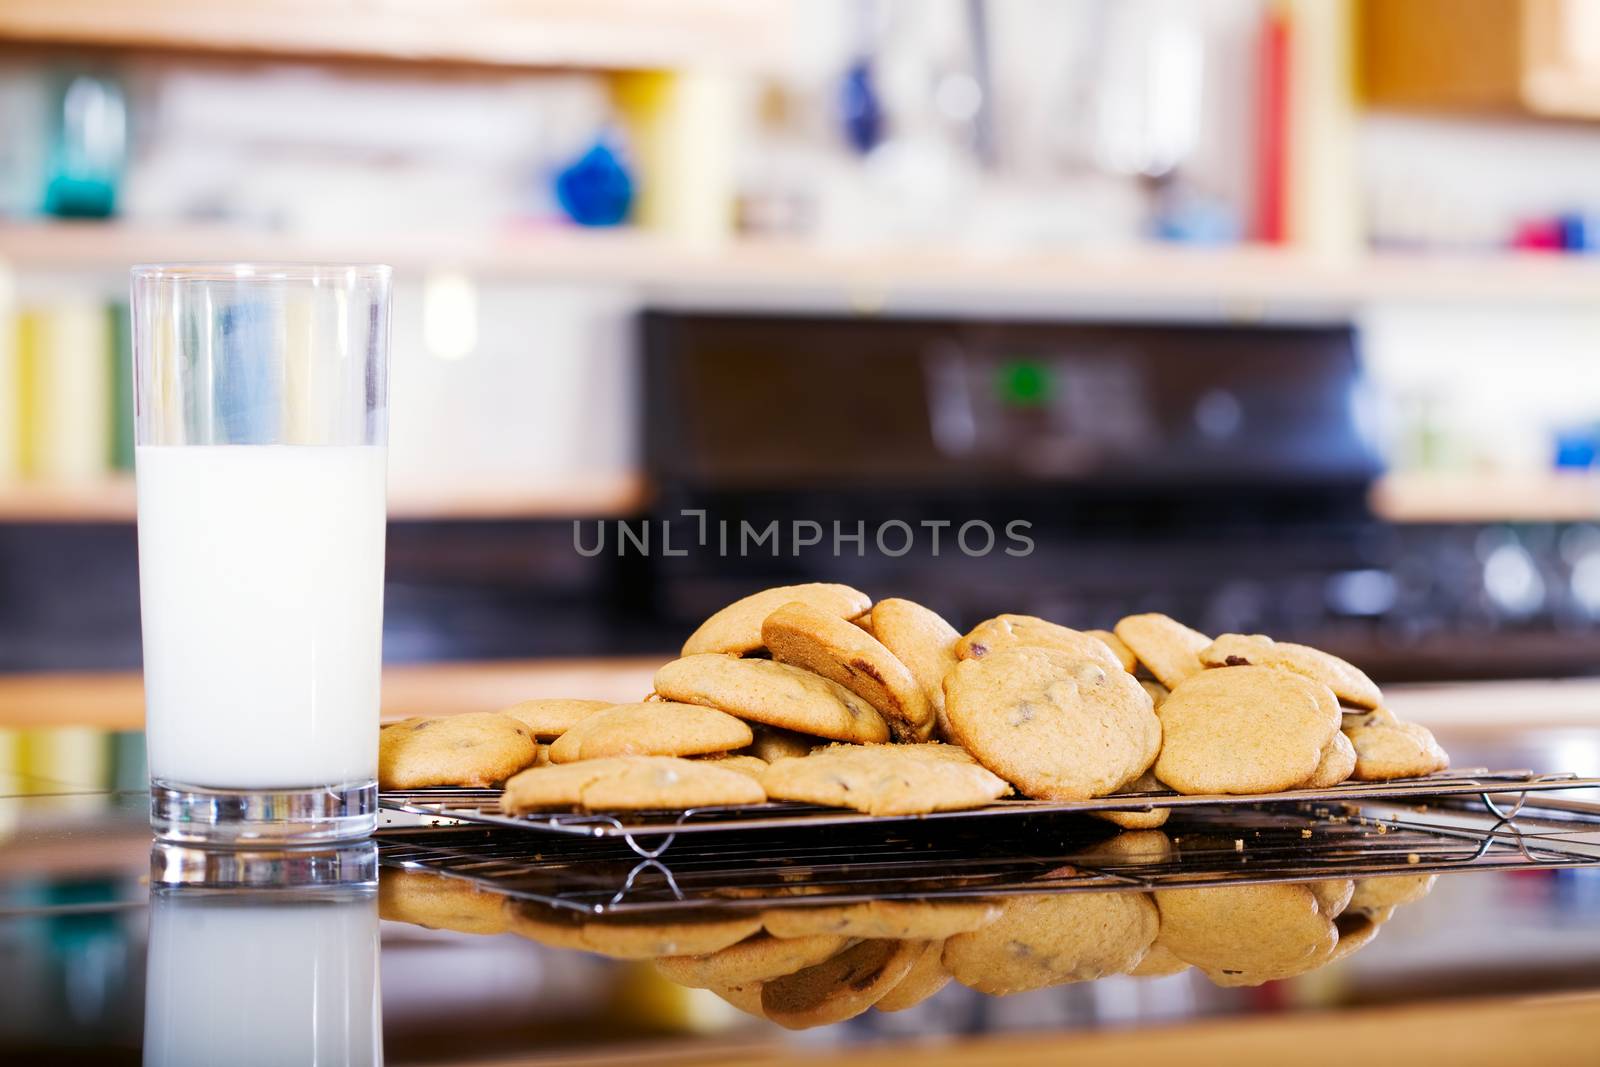 Snack of milk and cookies on kitchen counter by jarenwicklund